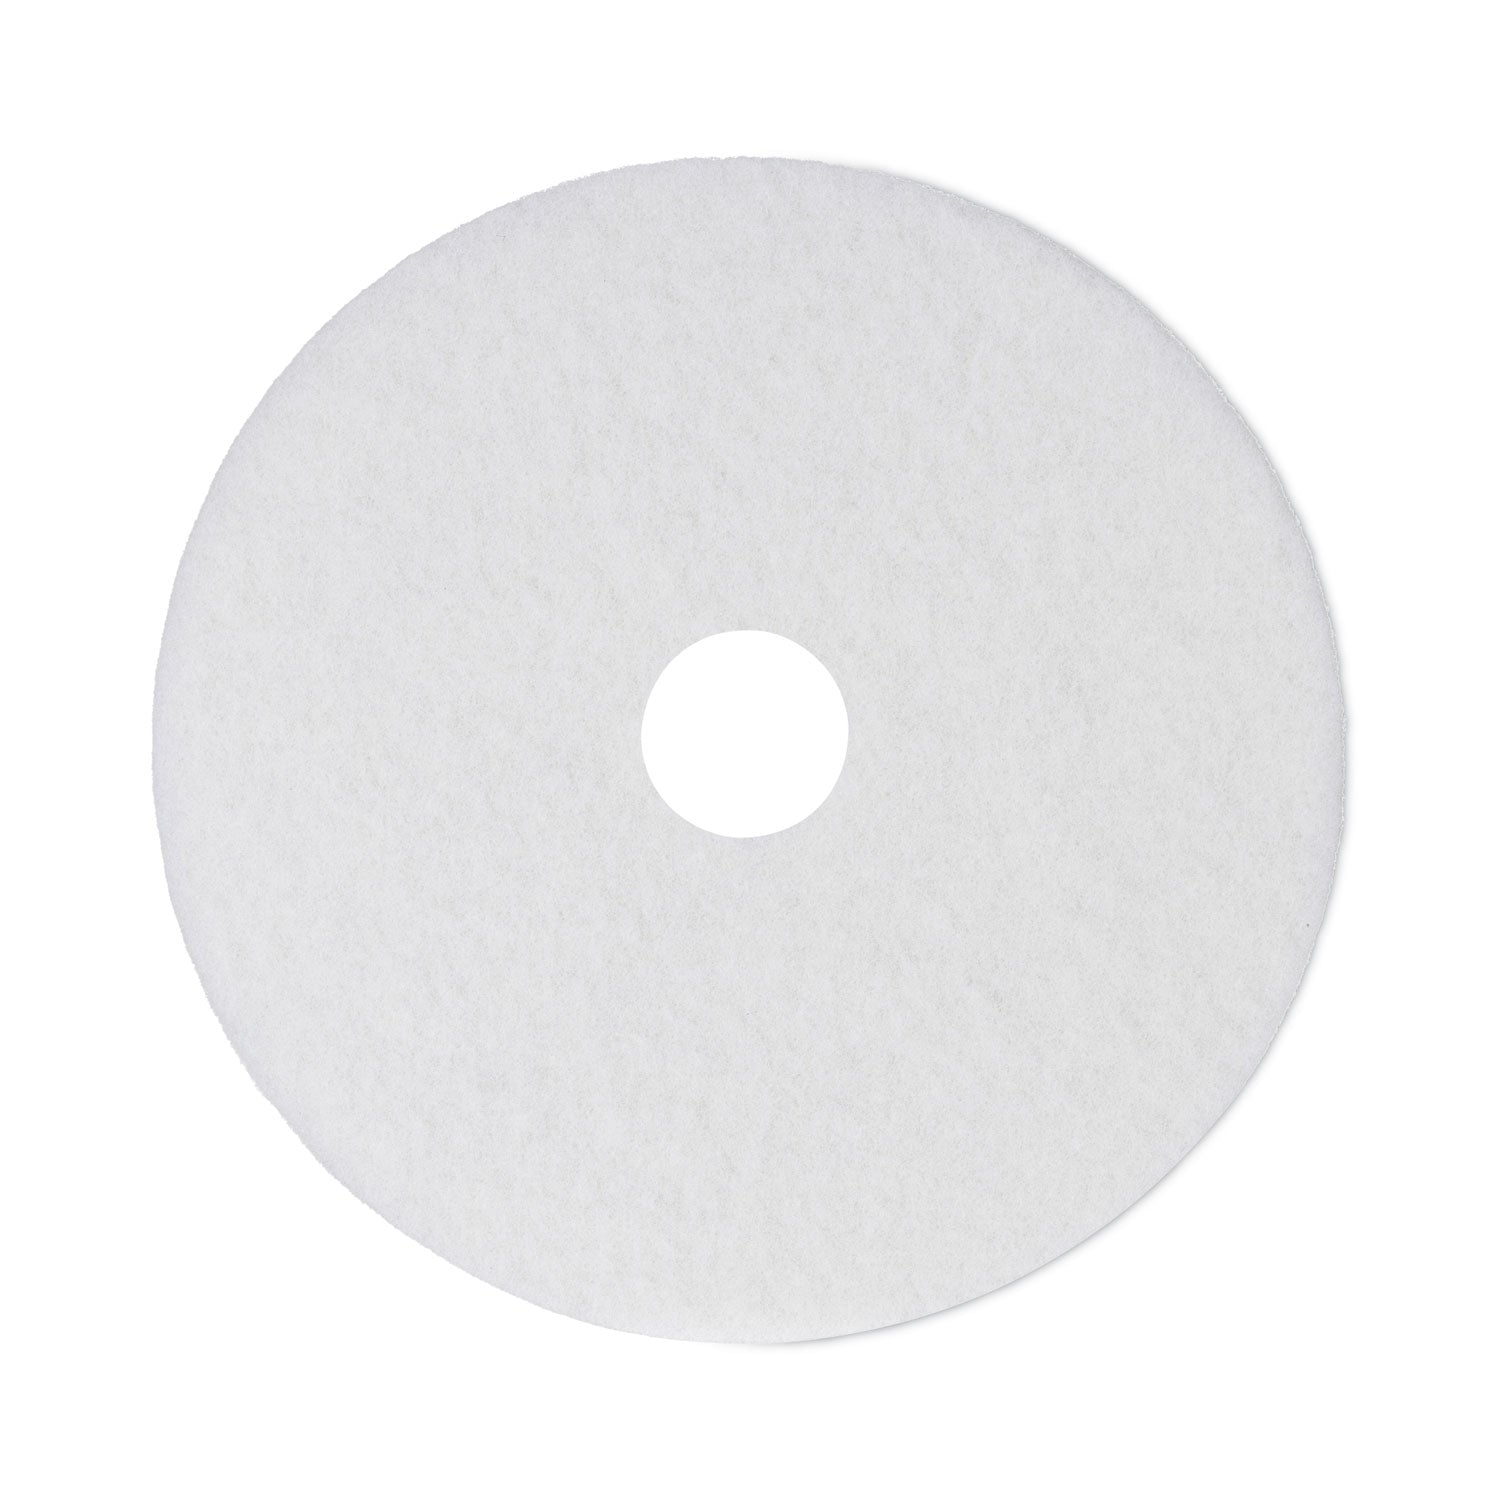 polishing-floor-pads-14-diameter-white-5-carton_bwk4014whi - 1